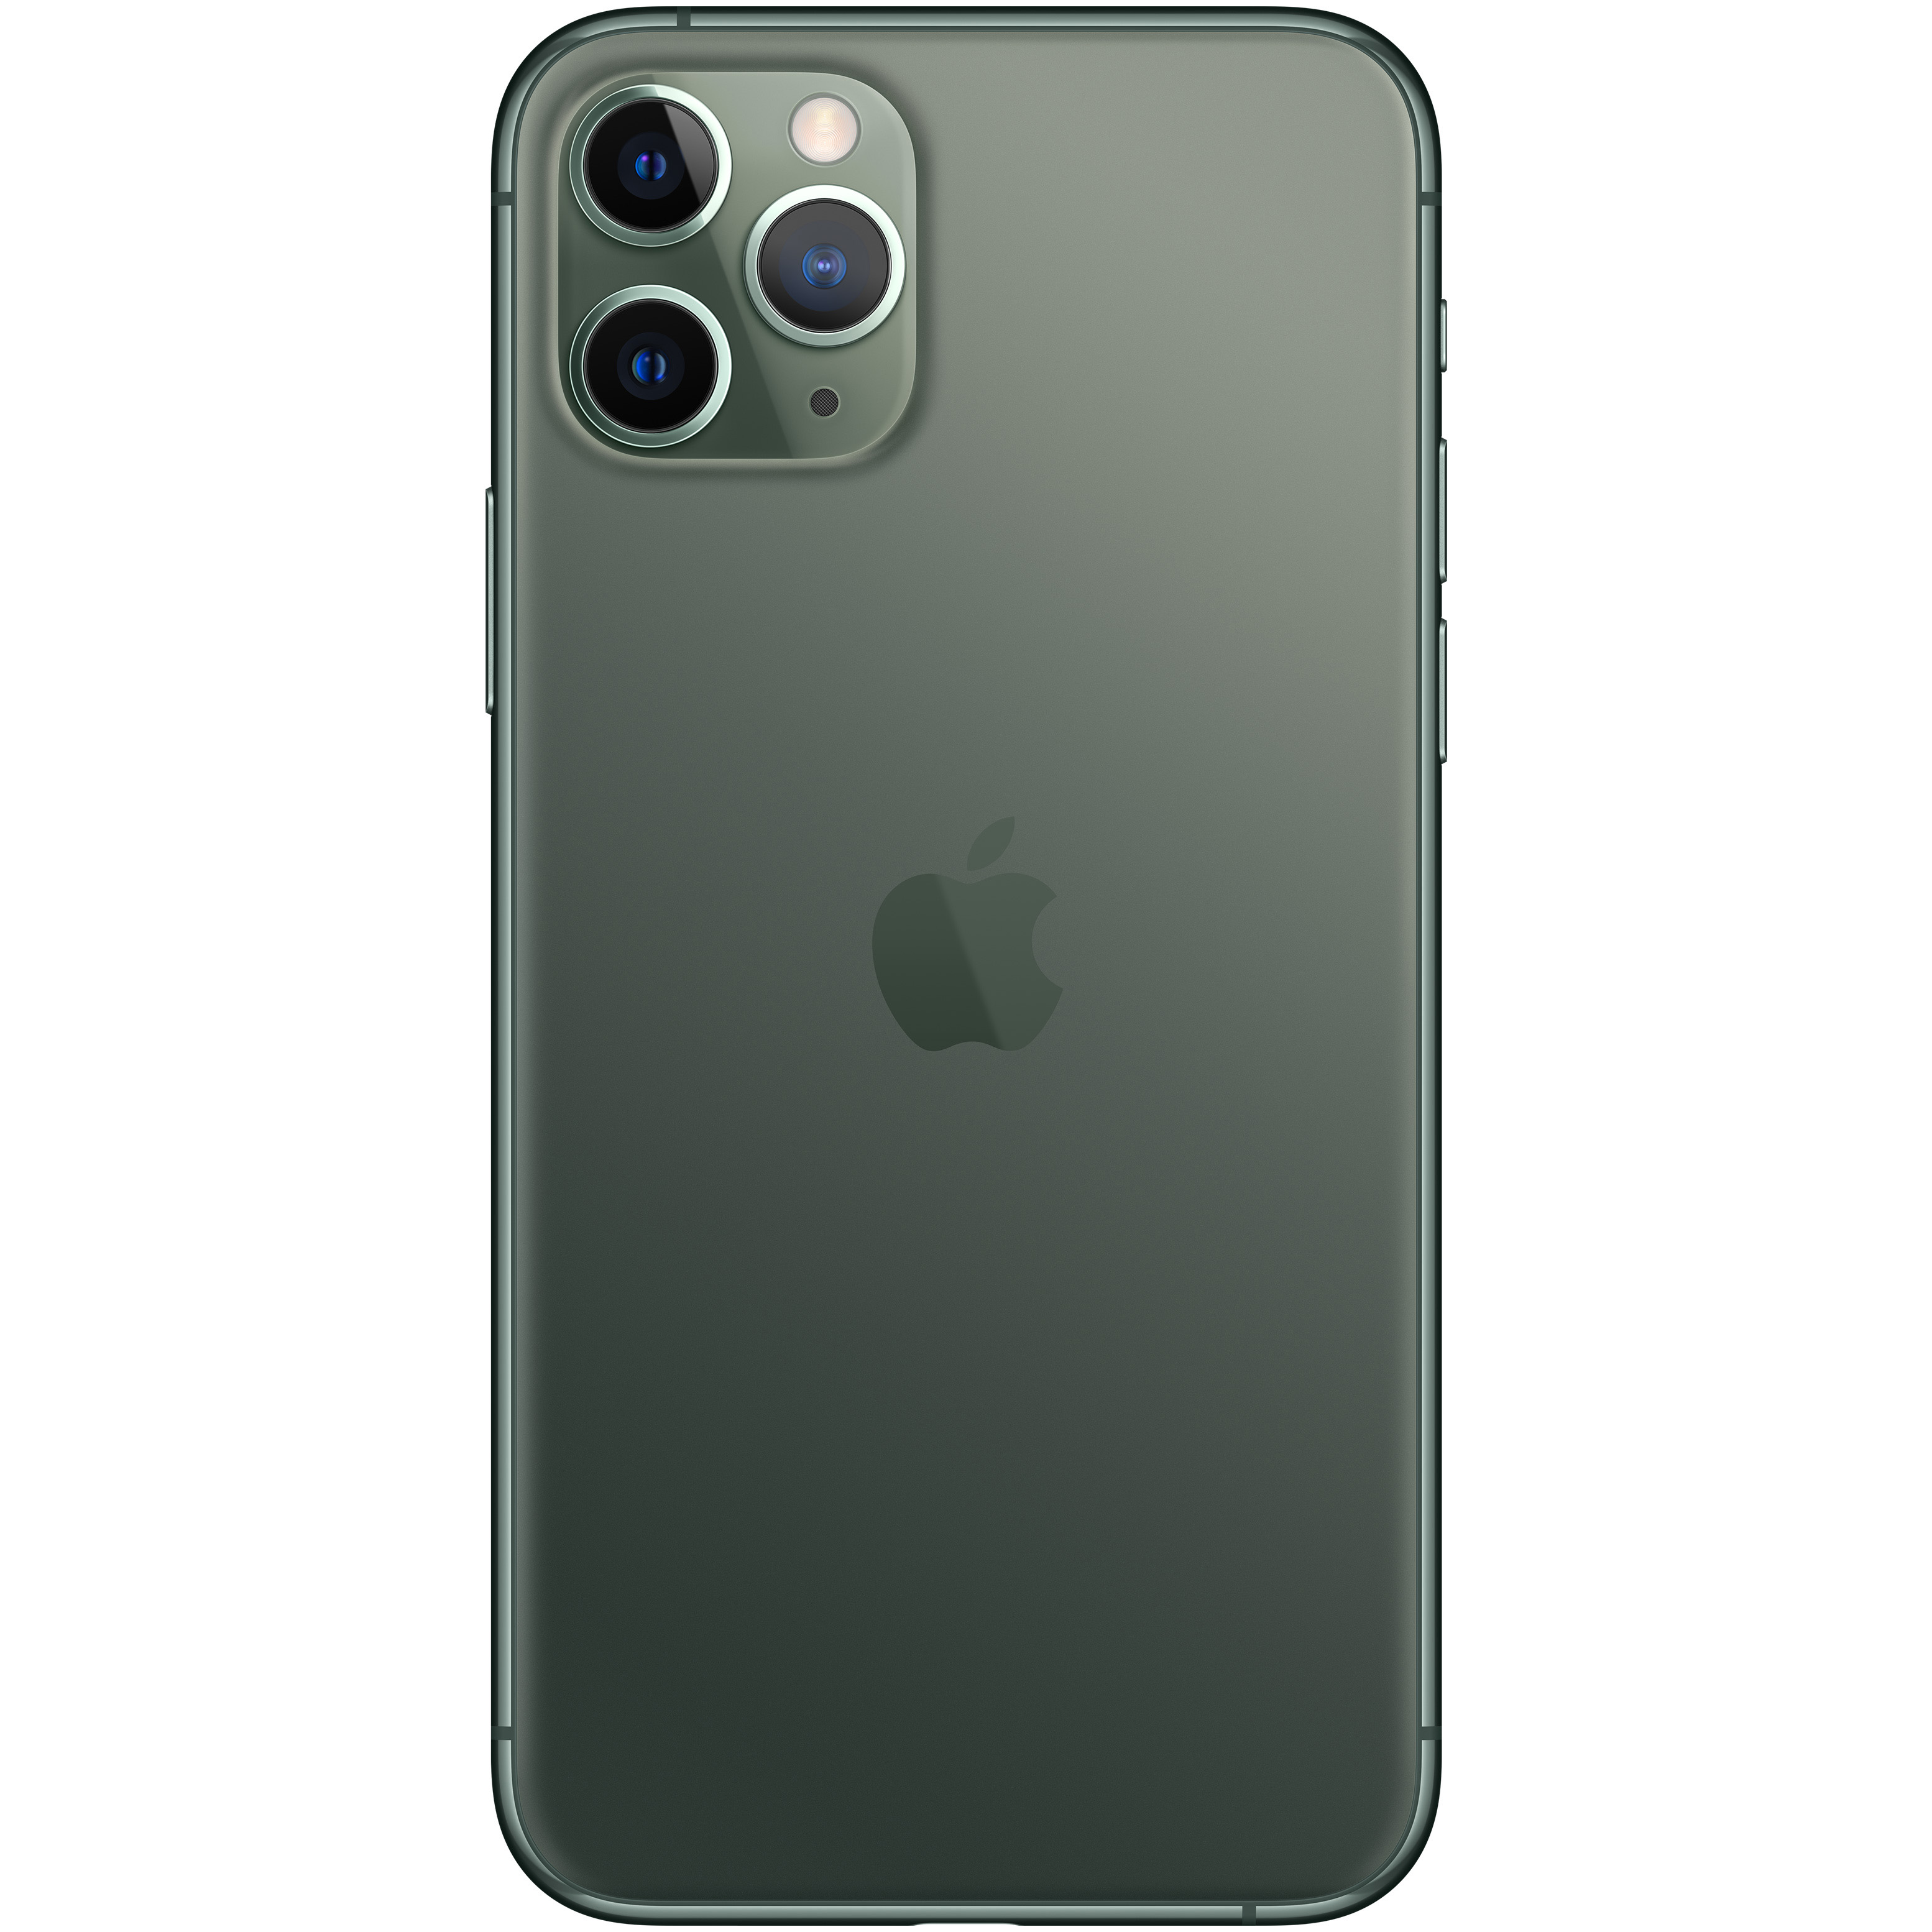 Задняя панель айфон 11. Iphone 11 Pro Max 256gb. Iphone 11 Pro 64gb. Apple iphone 11 Pro Max 64gb Midnight Green. Iphone 11 Pro Max Space Gray.